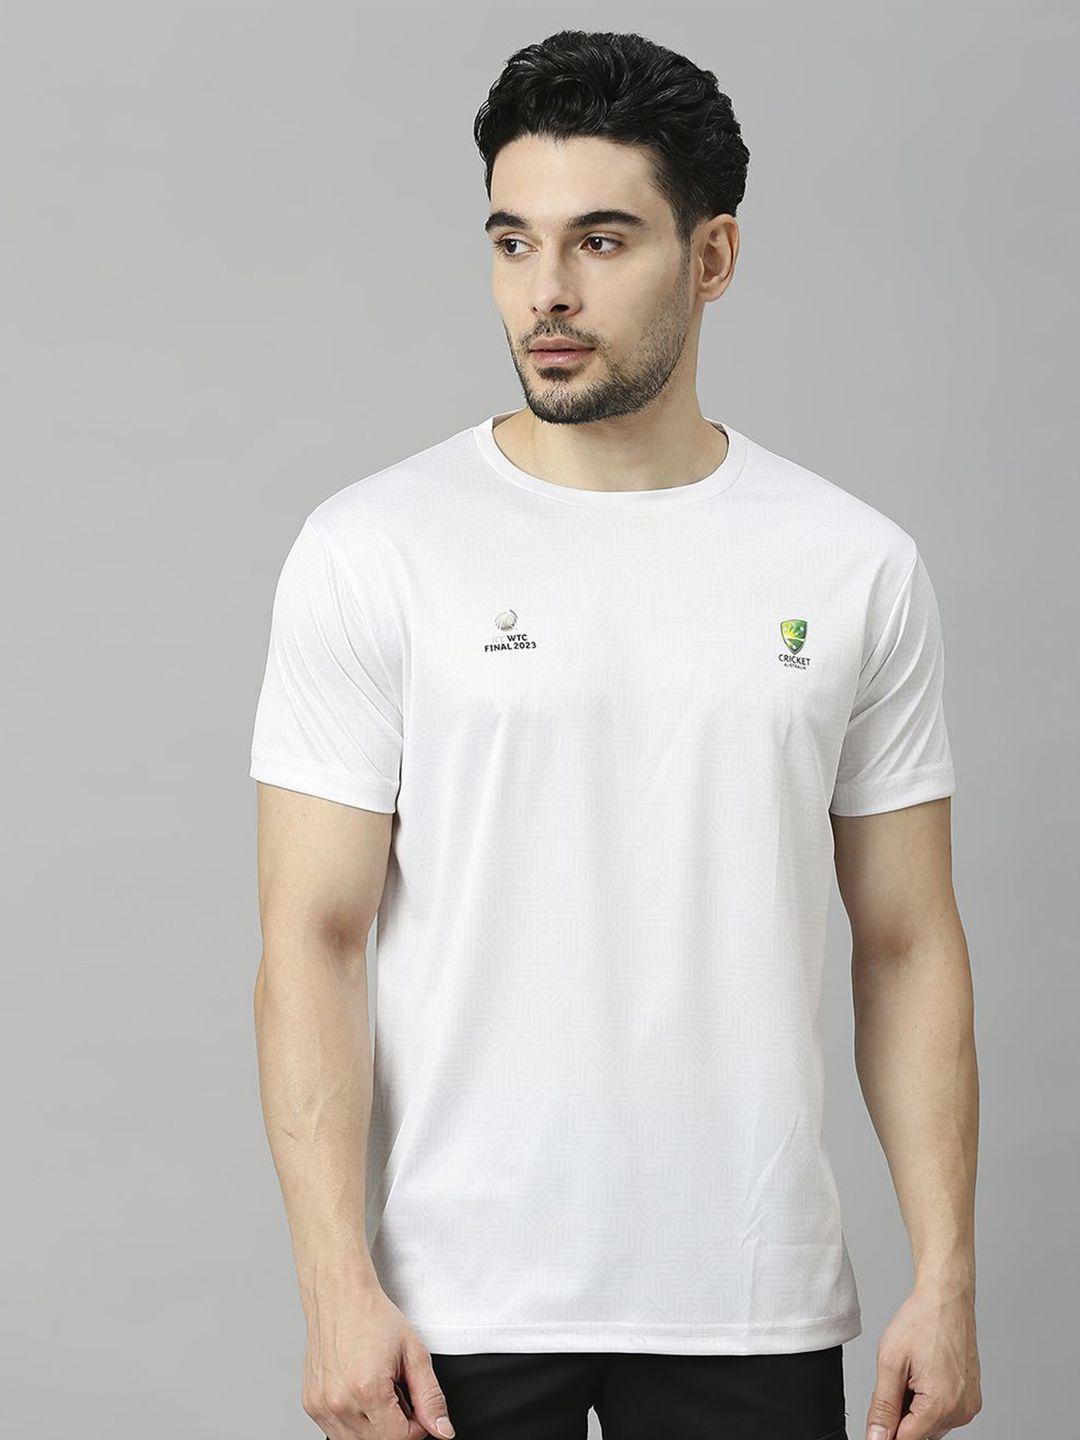 fancode icc test world cup men brand logo printed cotton moisture wicking t-shirt